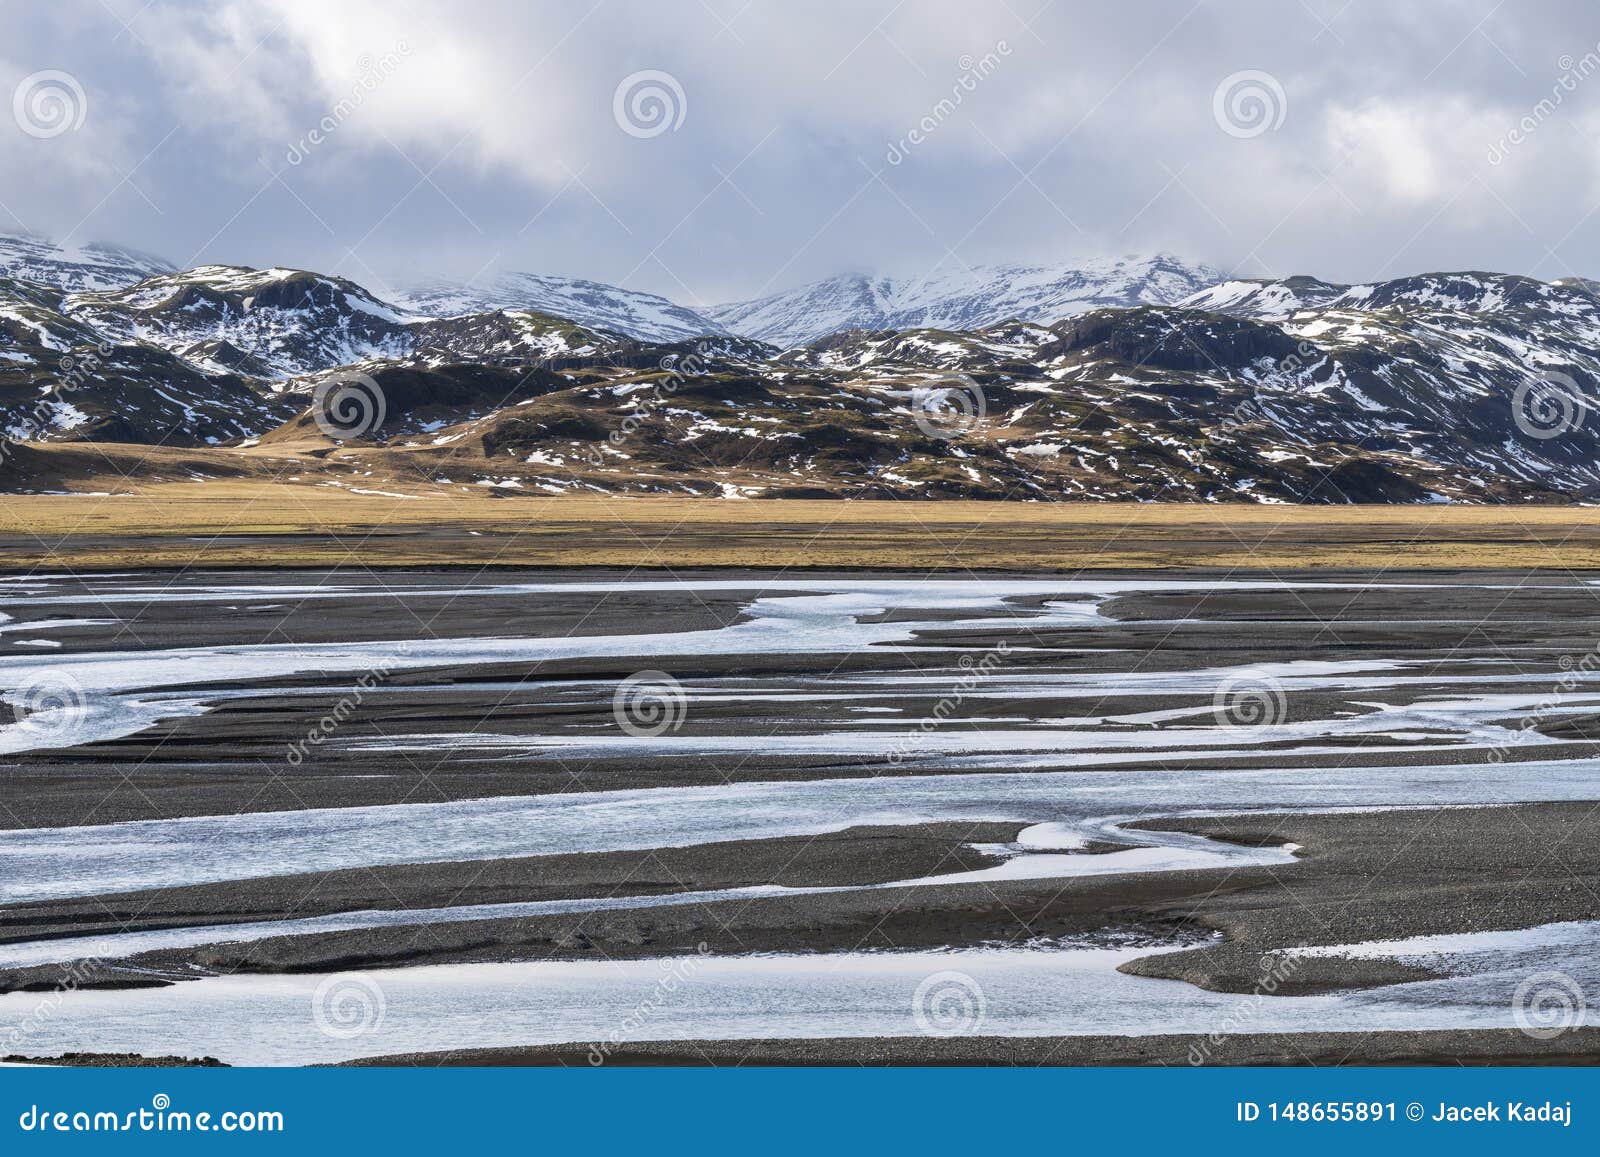 Iceland Countryside Landscape Stock Image - Image of dramatic, northern ...